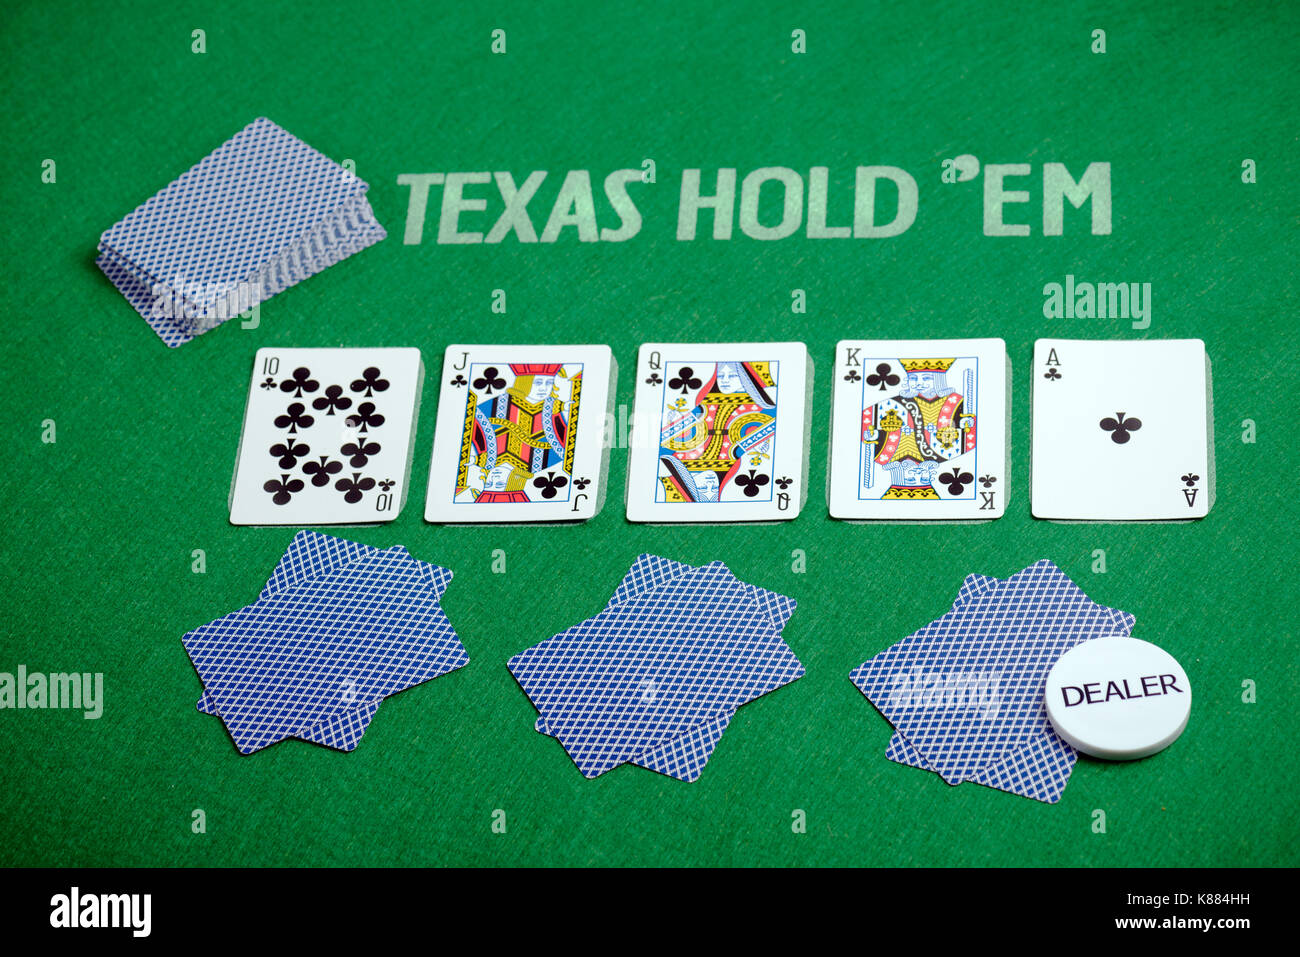 Poker Karten auf Grün poker Tuch. Texas Hold'em Stockfotografie - Alamy